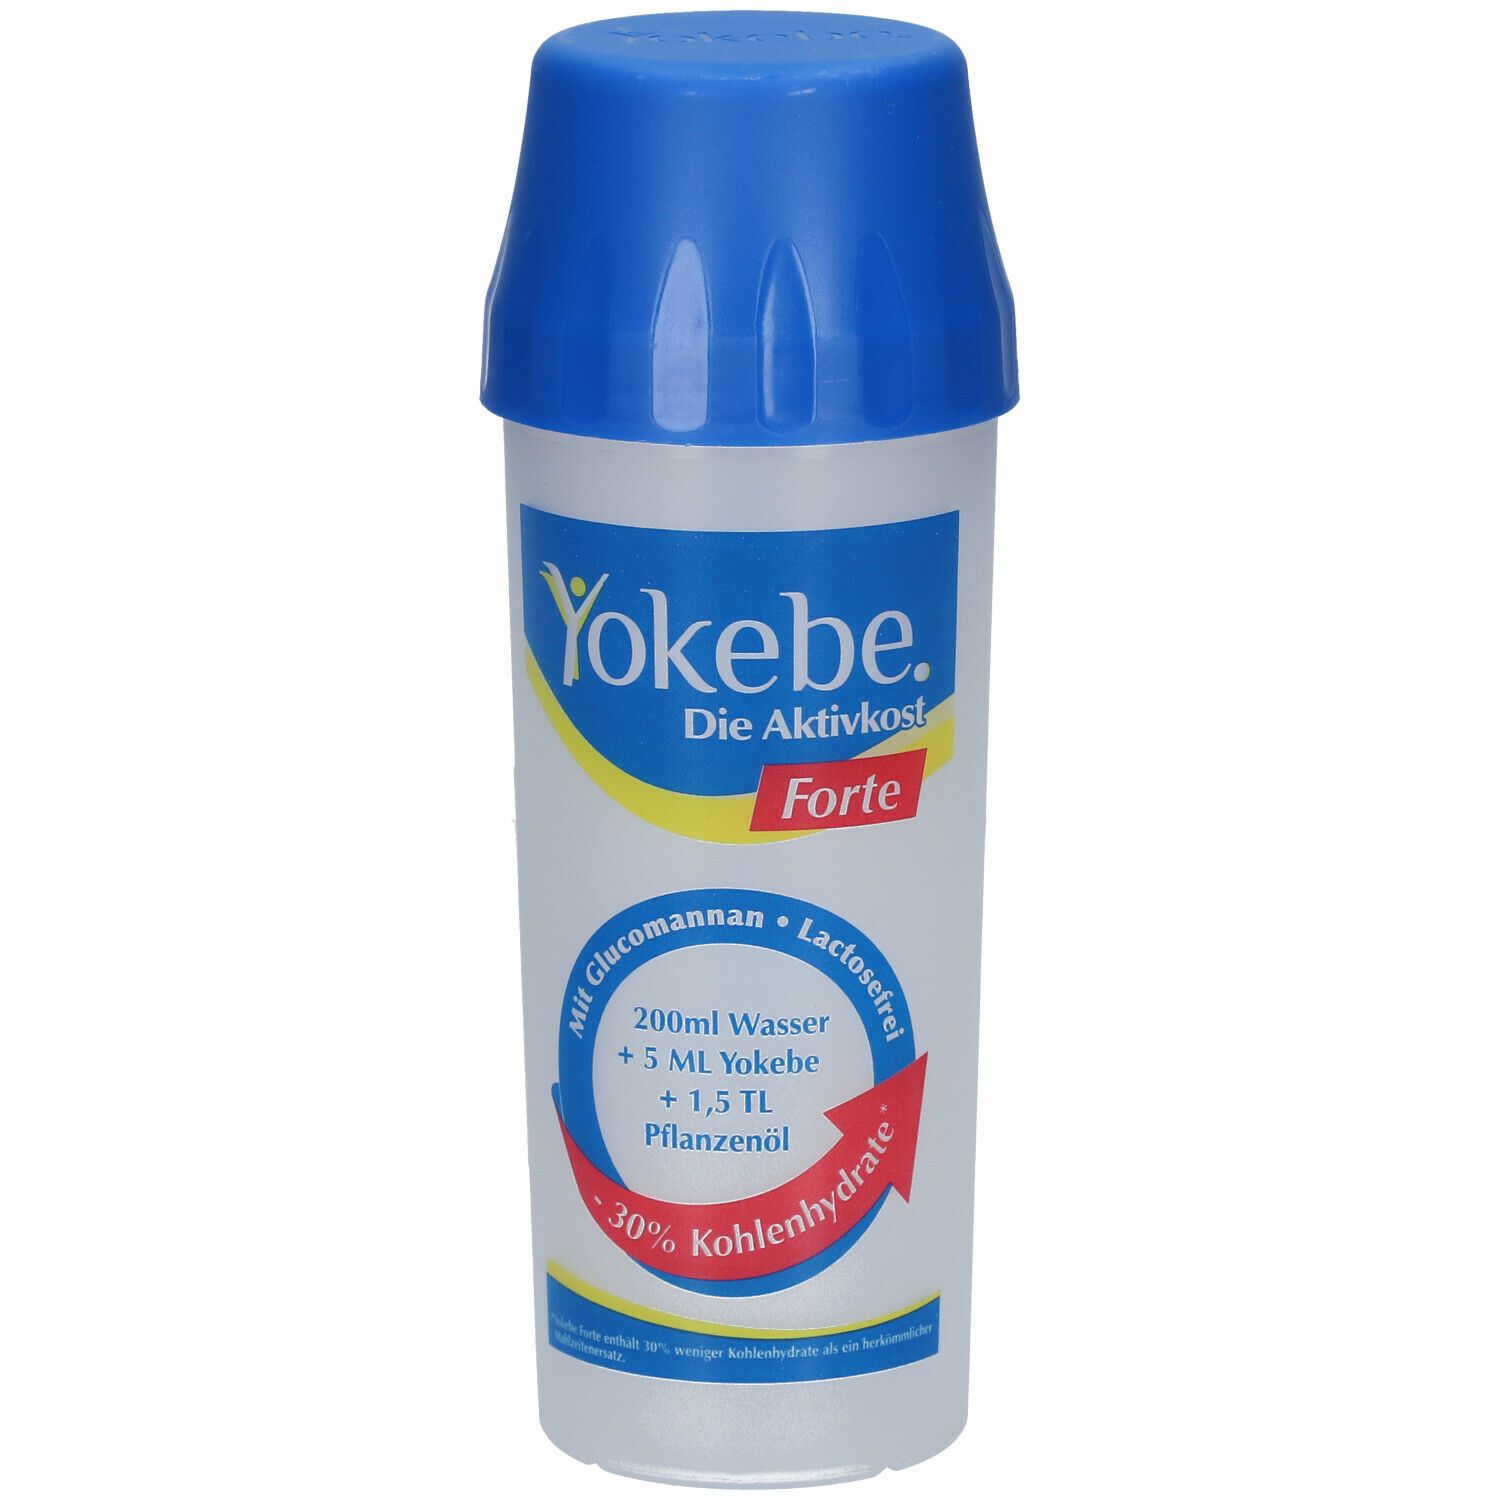 Yokebe Forte Shaker